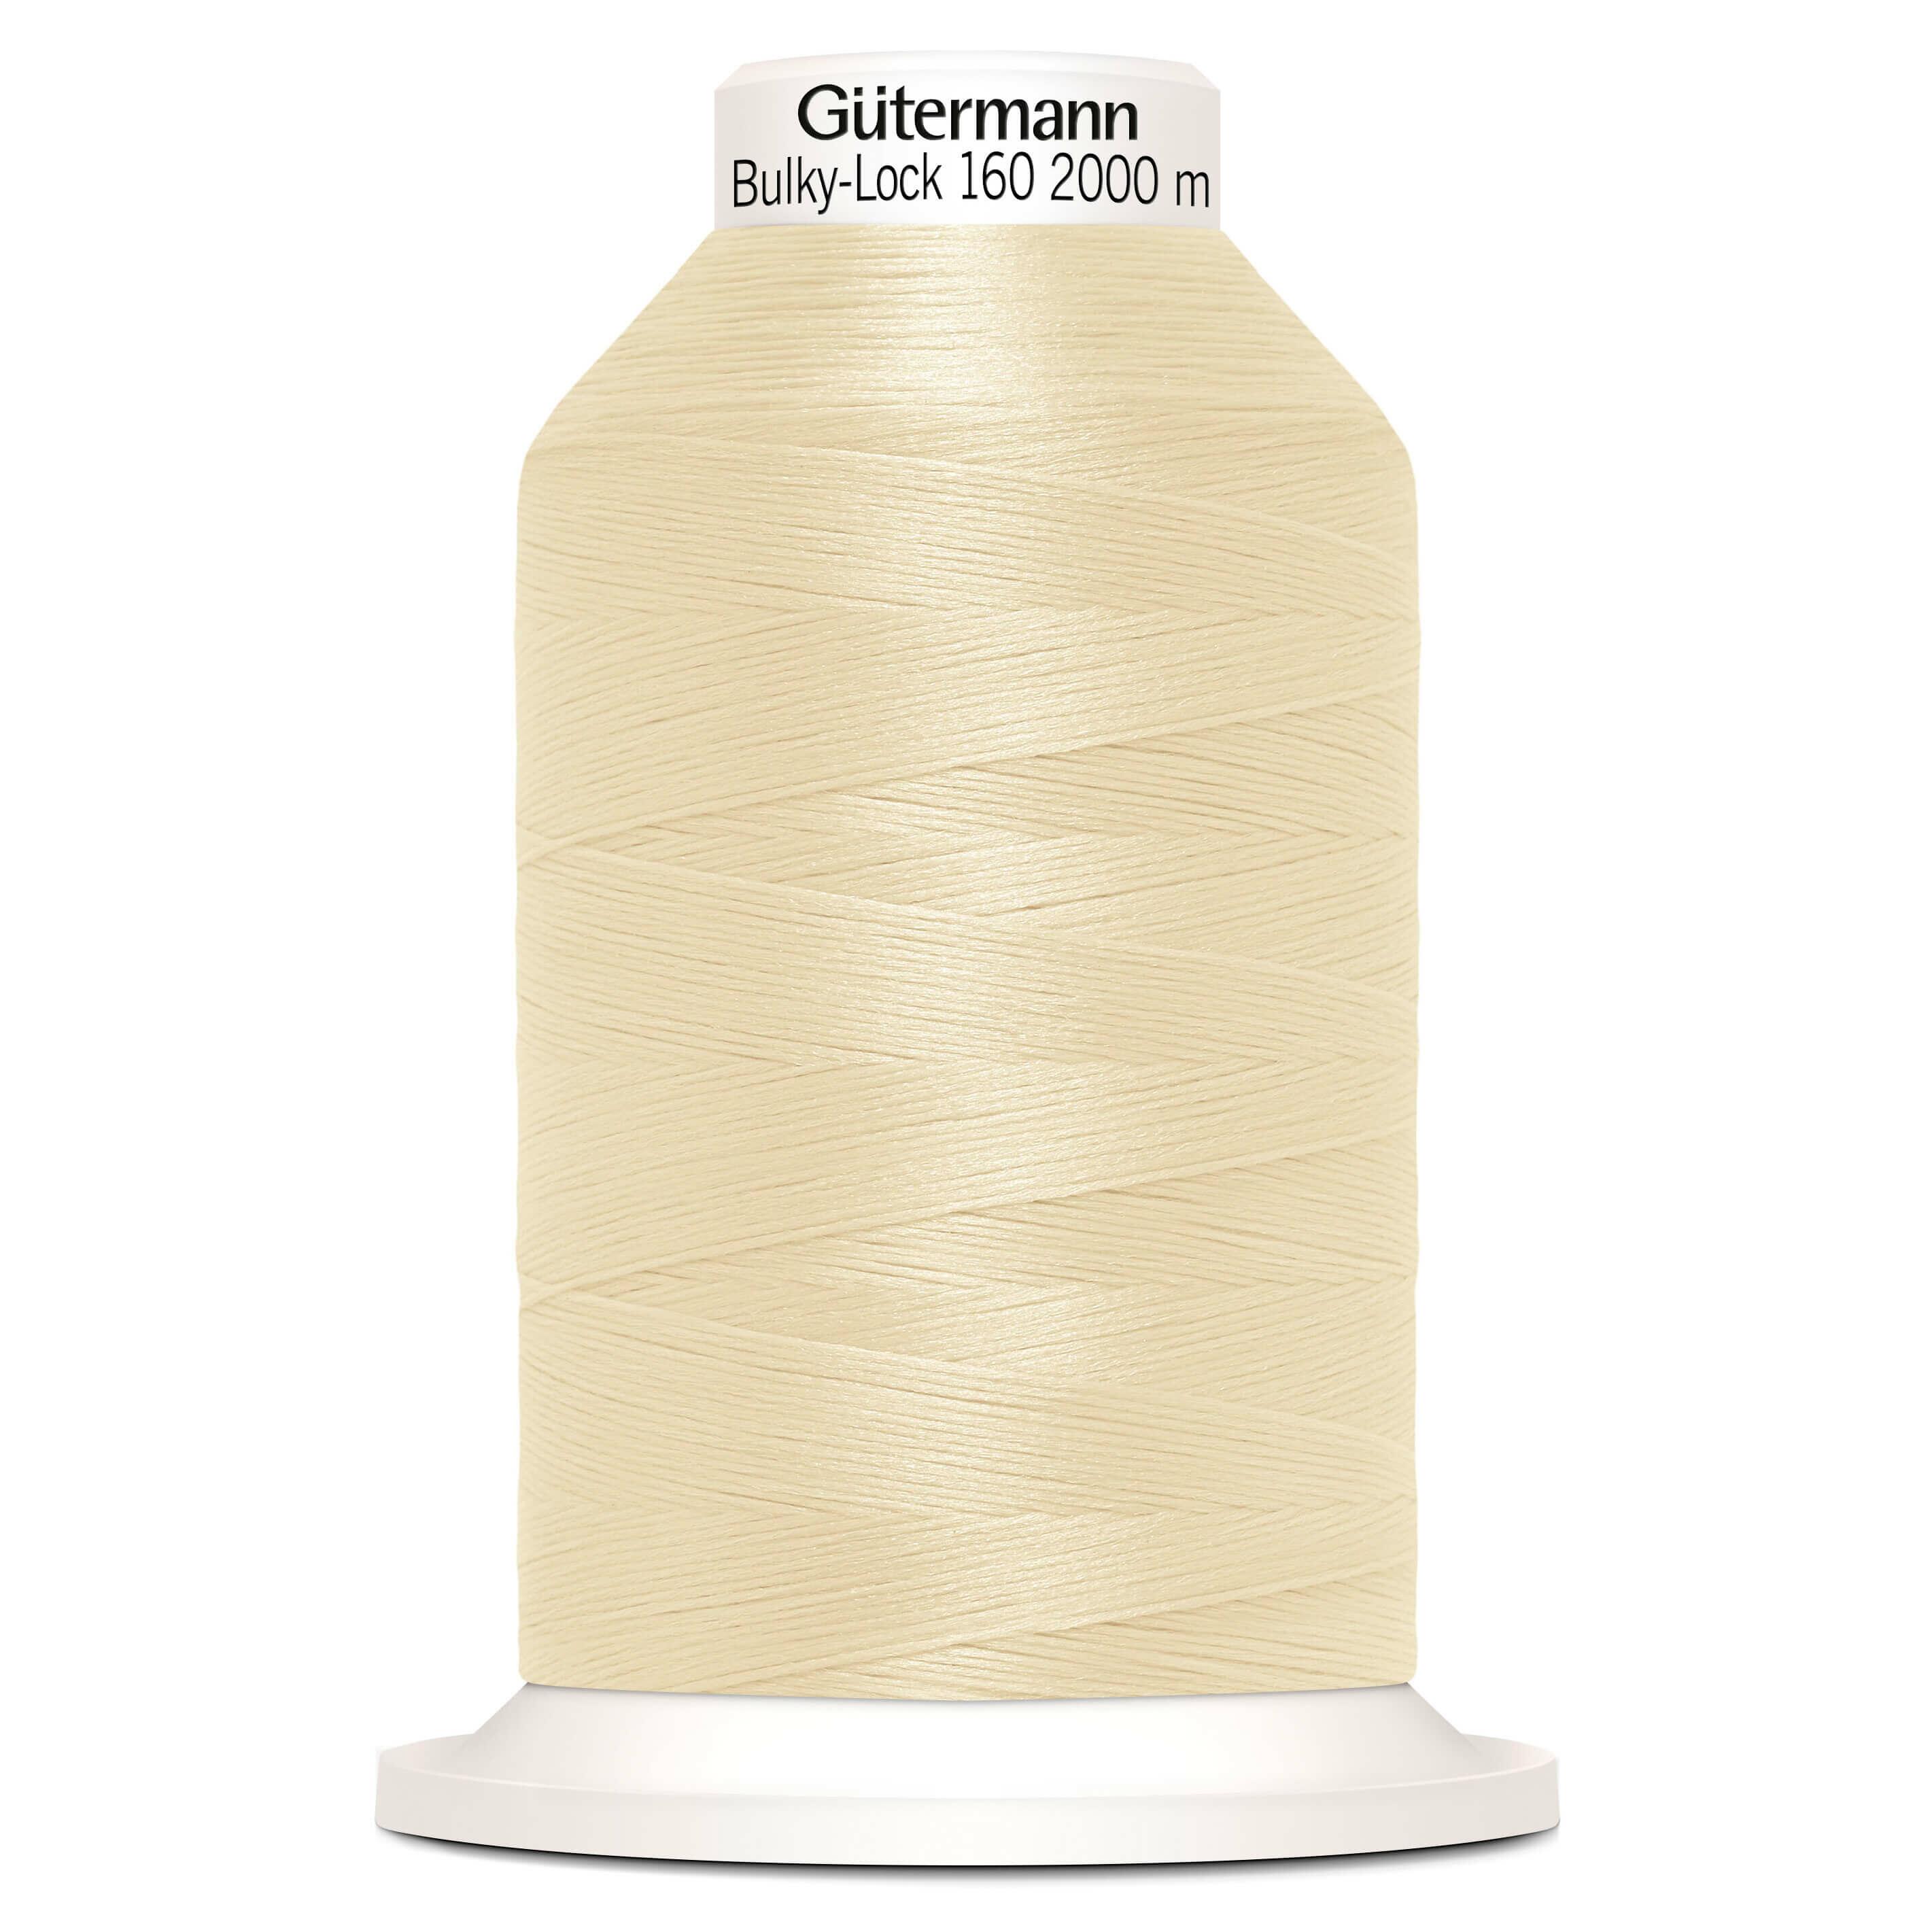 Gutermann Bulky-lock 160 2000m overlocking thread in colour number 414 Cream